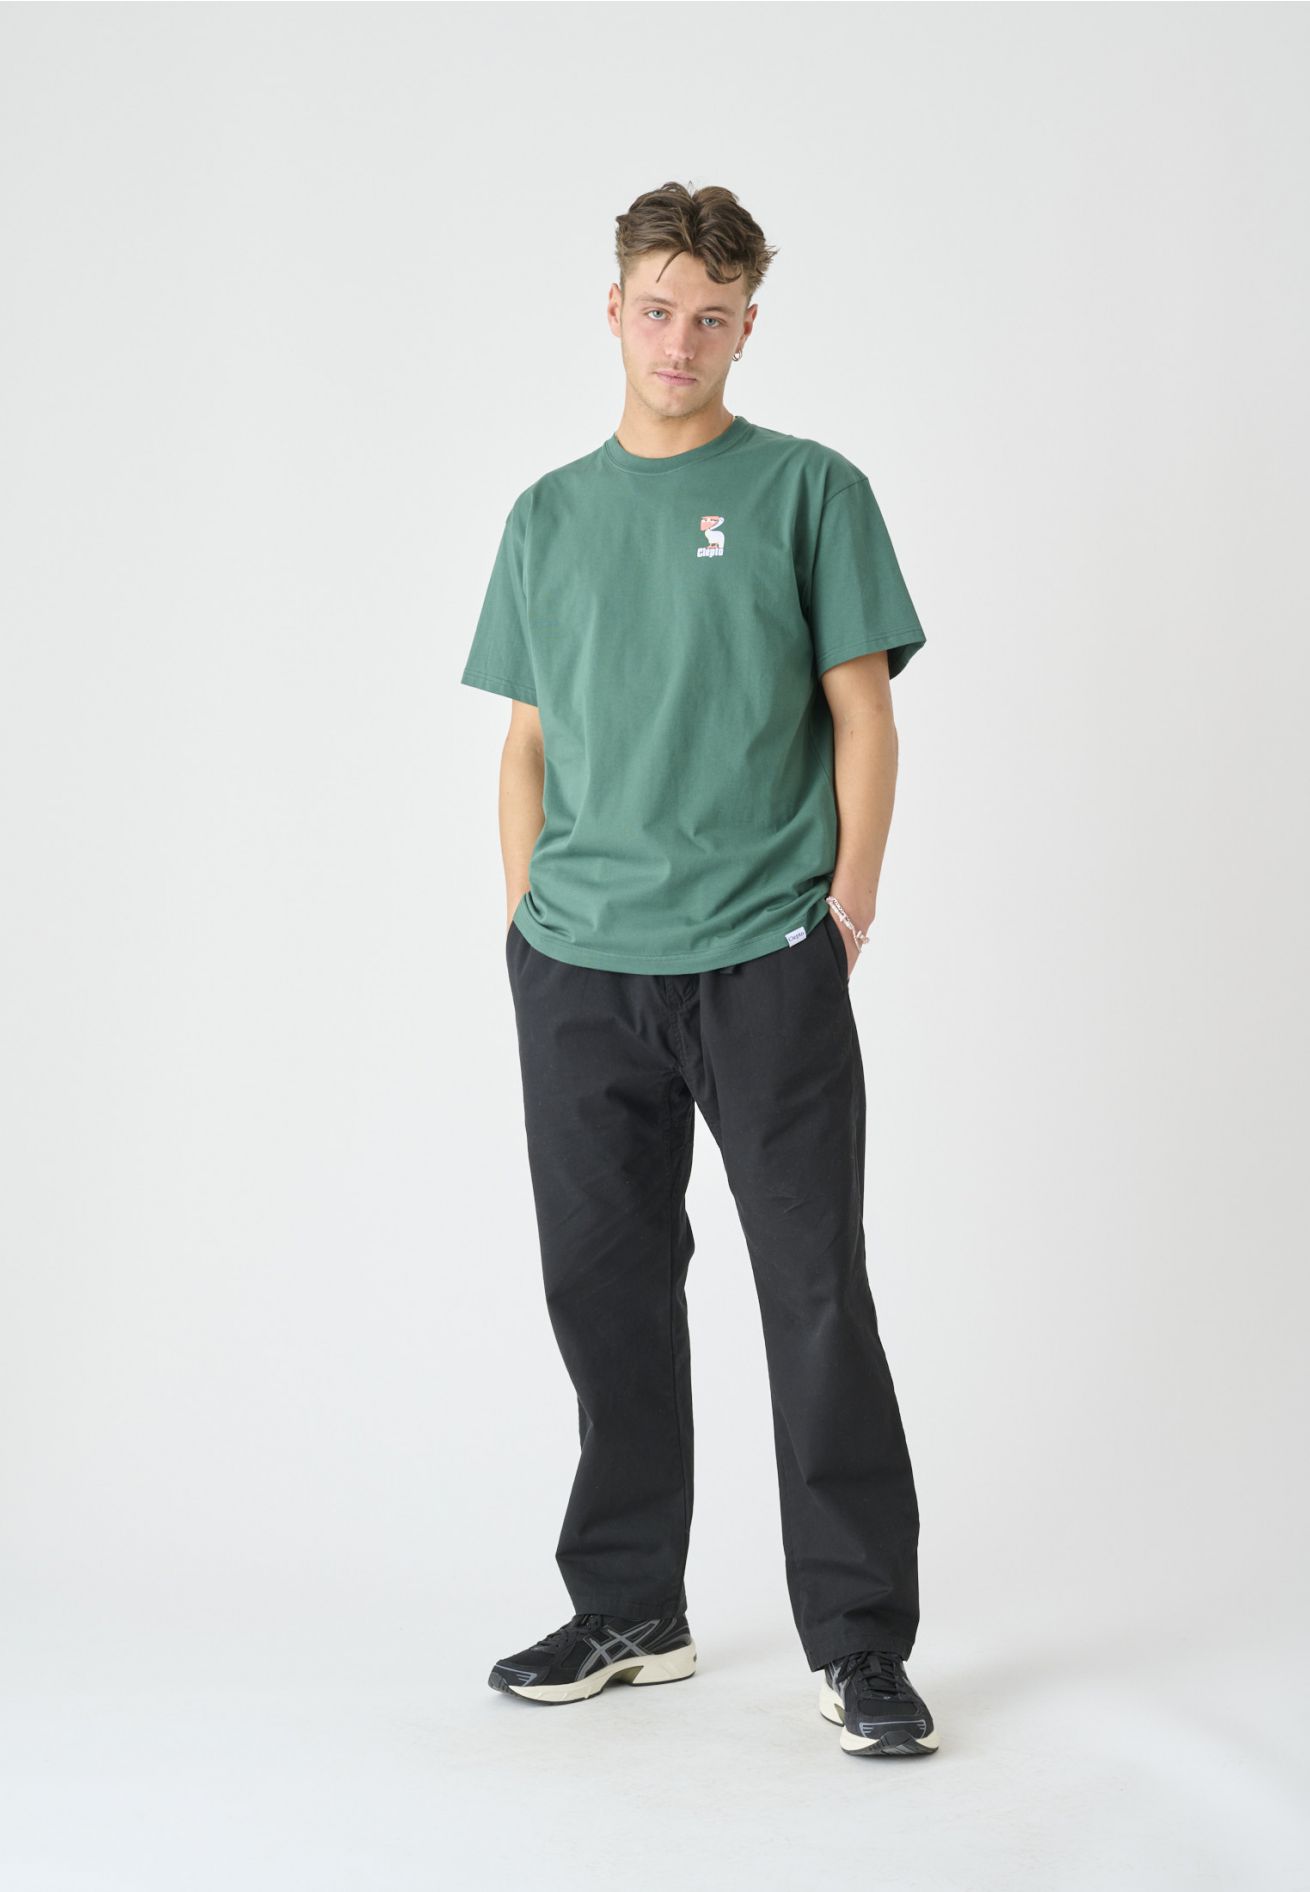 CLEPTOMANICX-PASSENGER-BOXY-TEE-Shirt-evergreen7